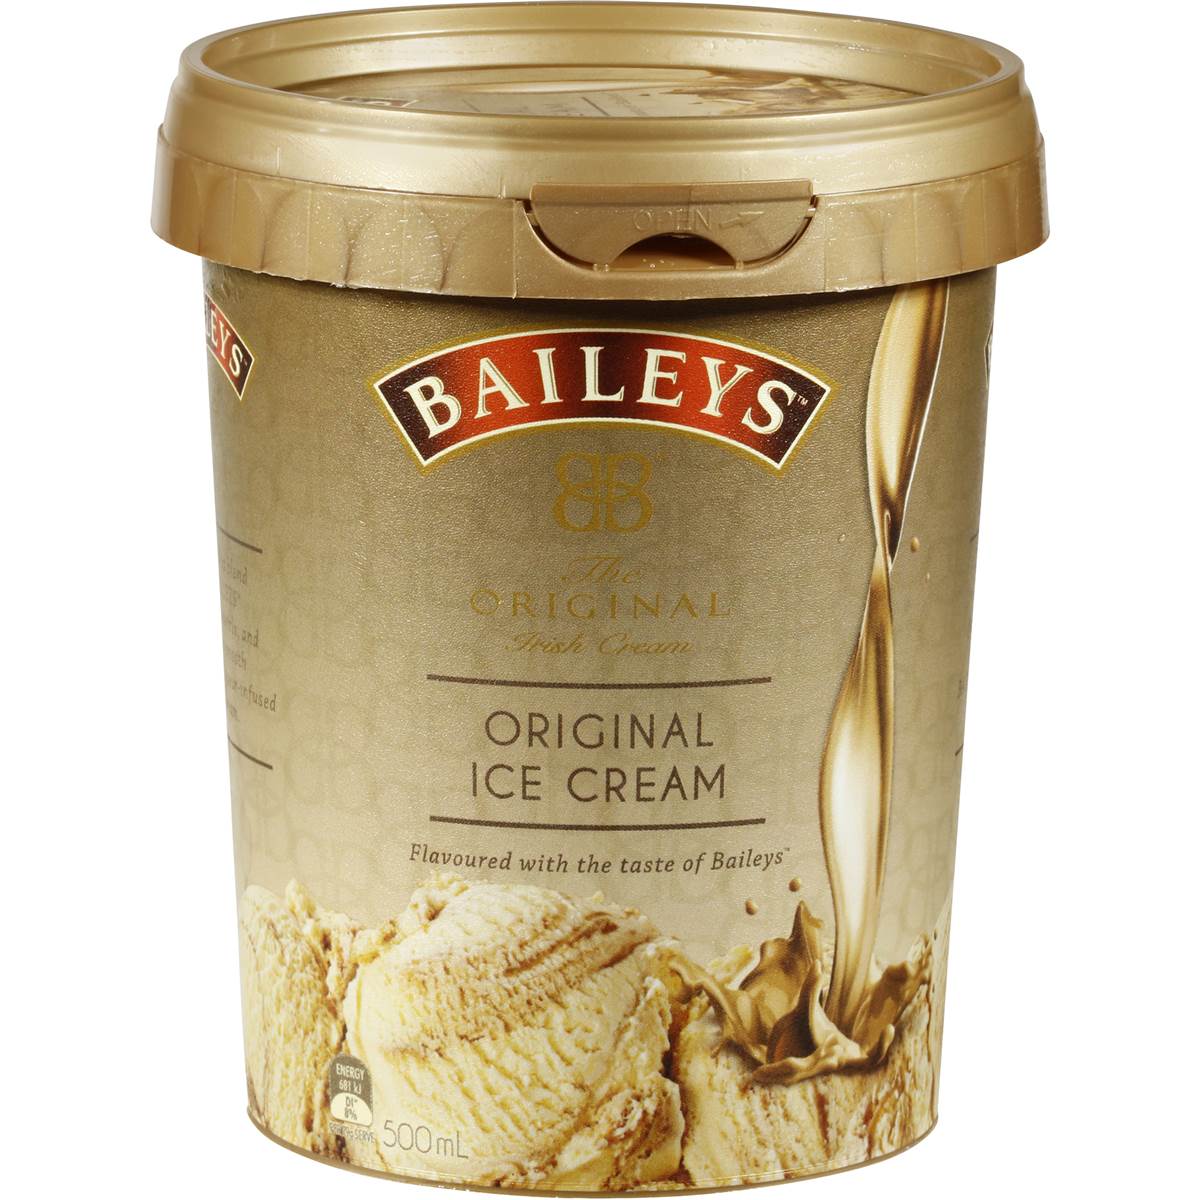 Baileys Ice Cream Ice Cream